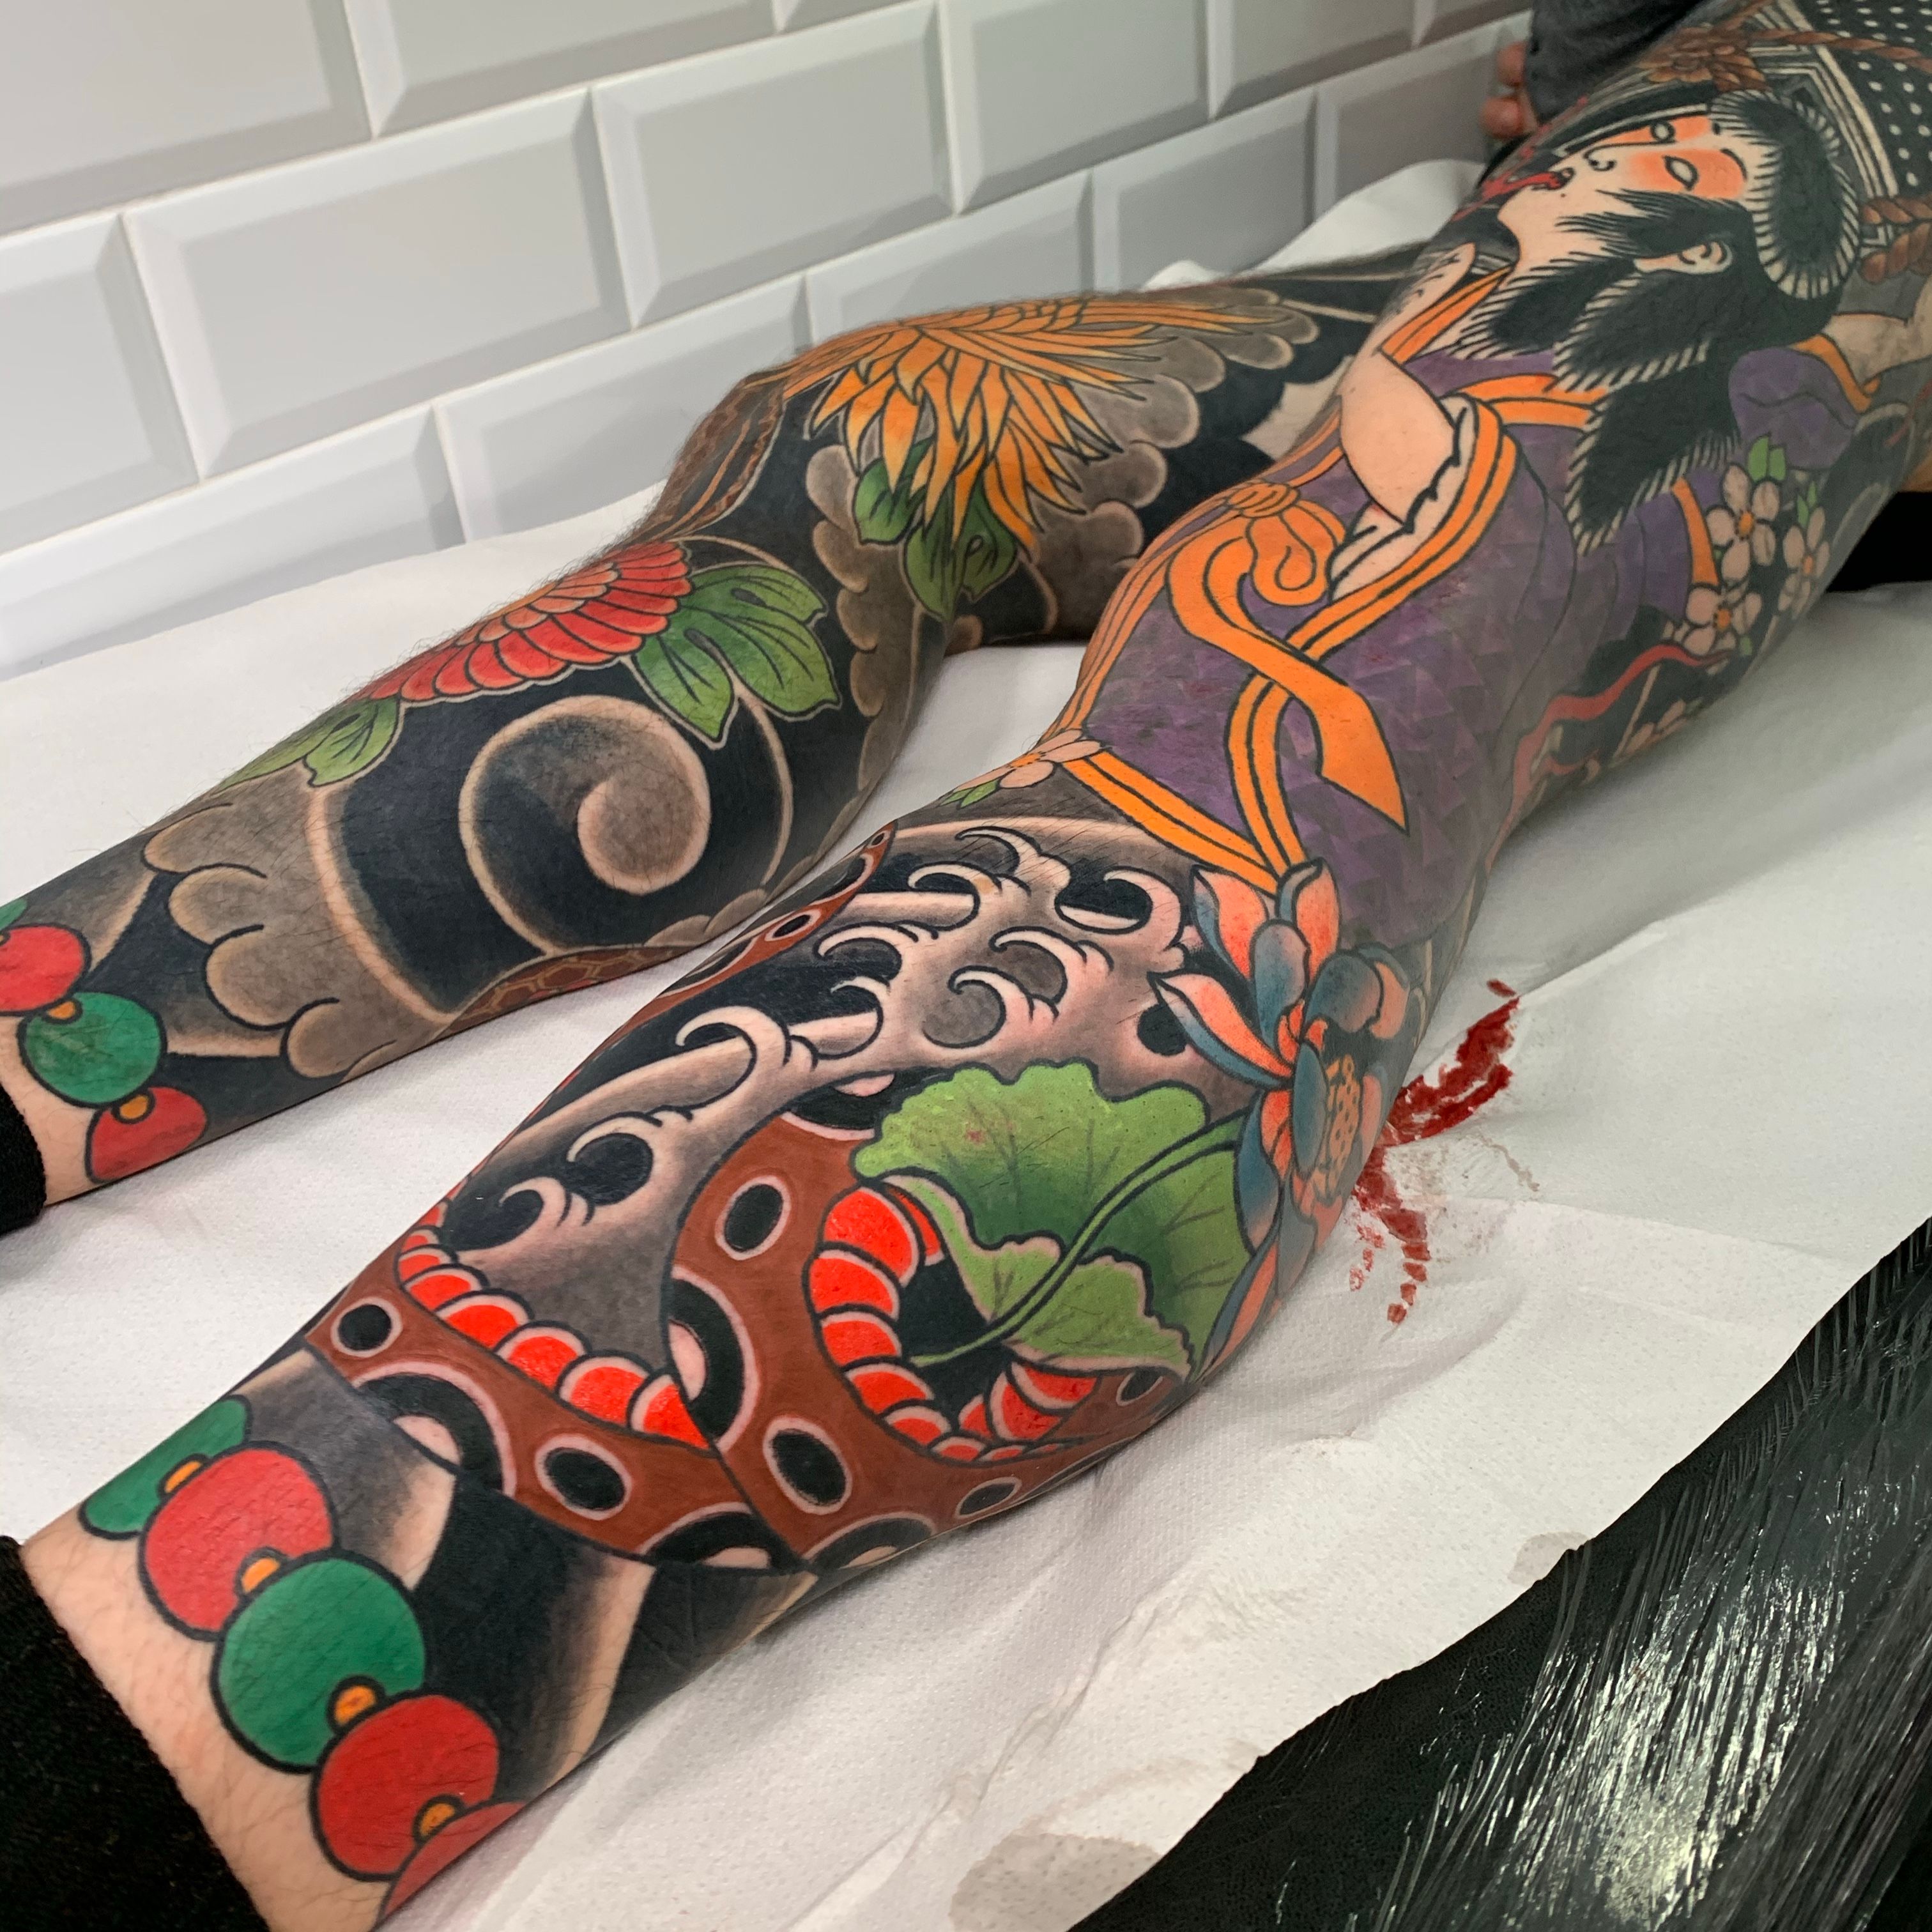 bodysuit' in Tattoos • Search in +1.3M Tattoos Now • Tattoodo